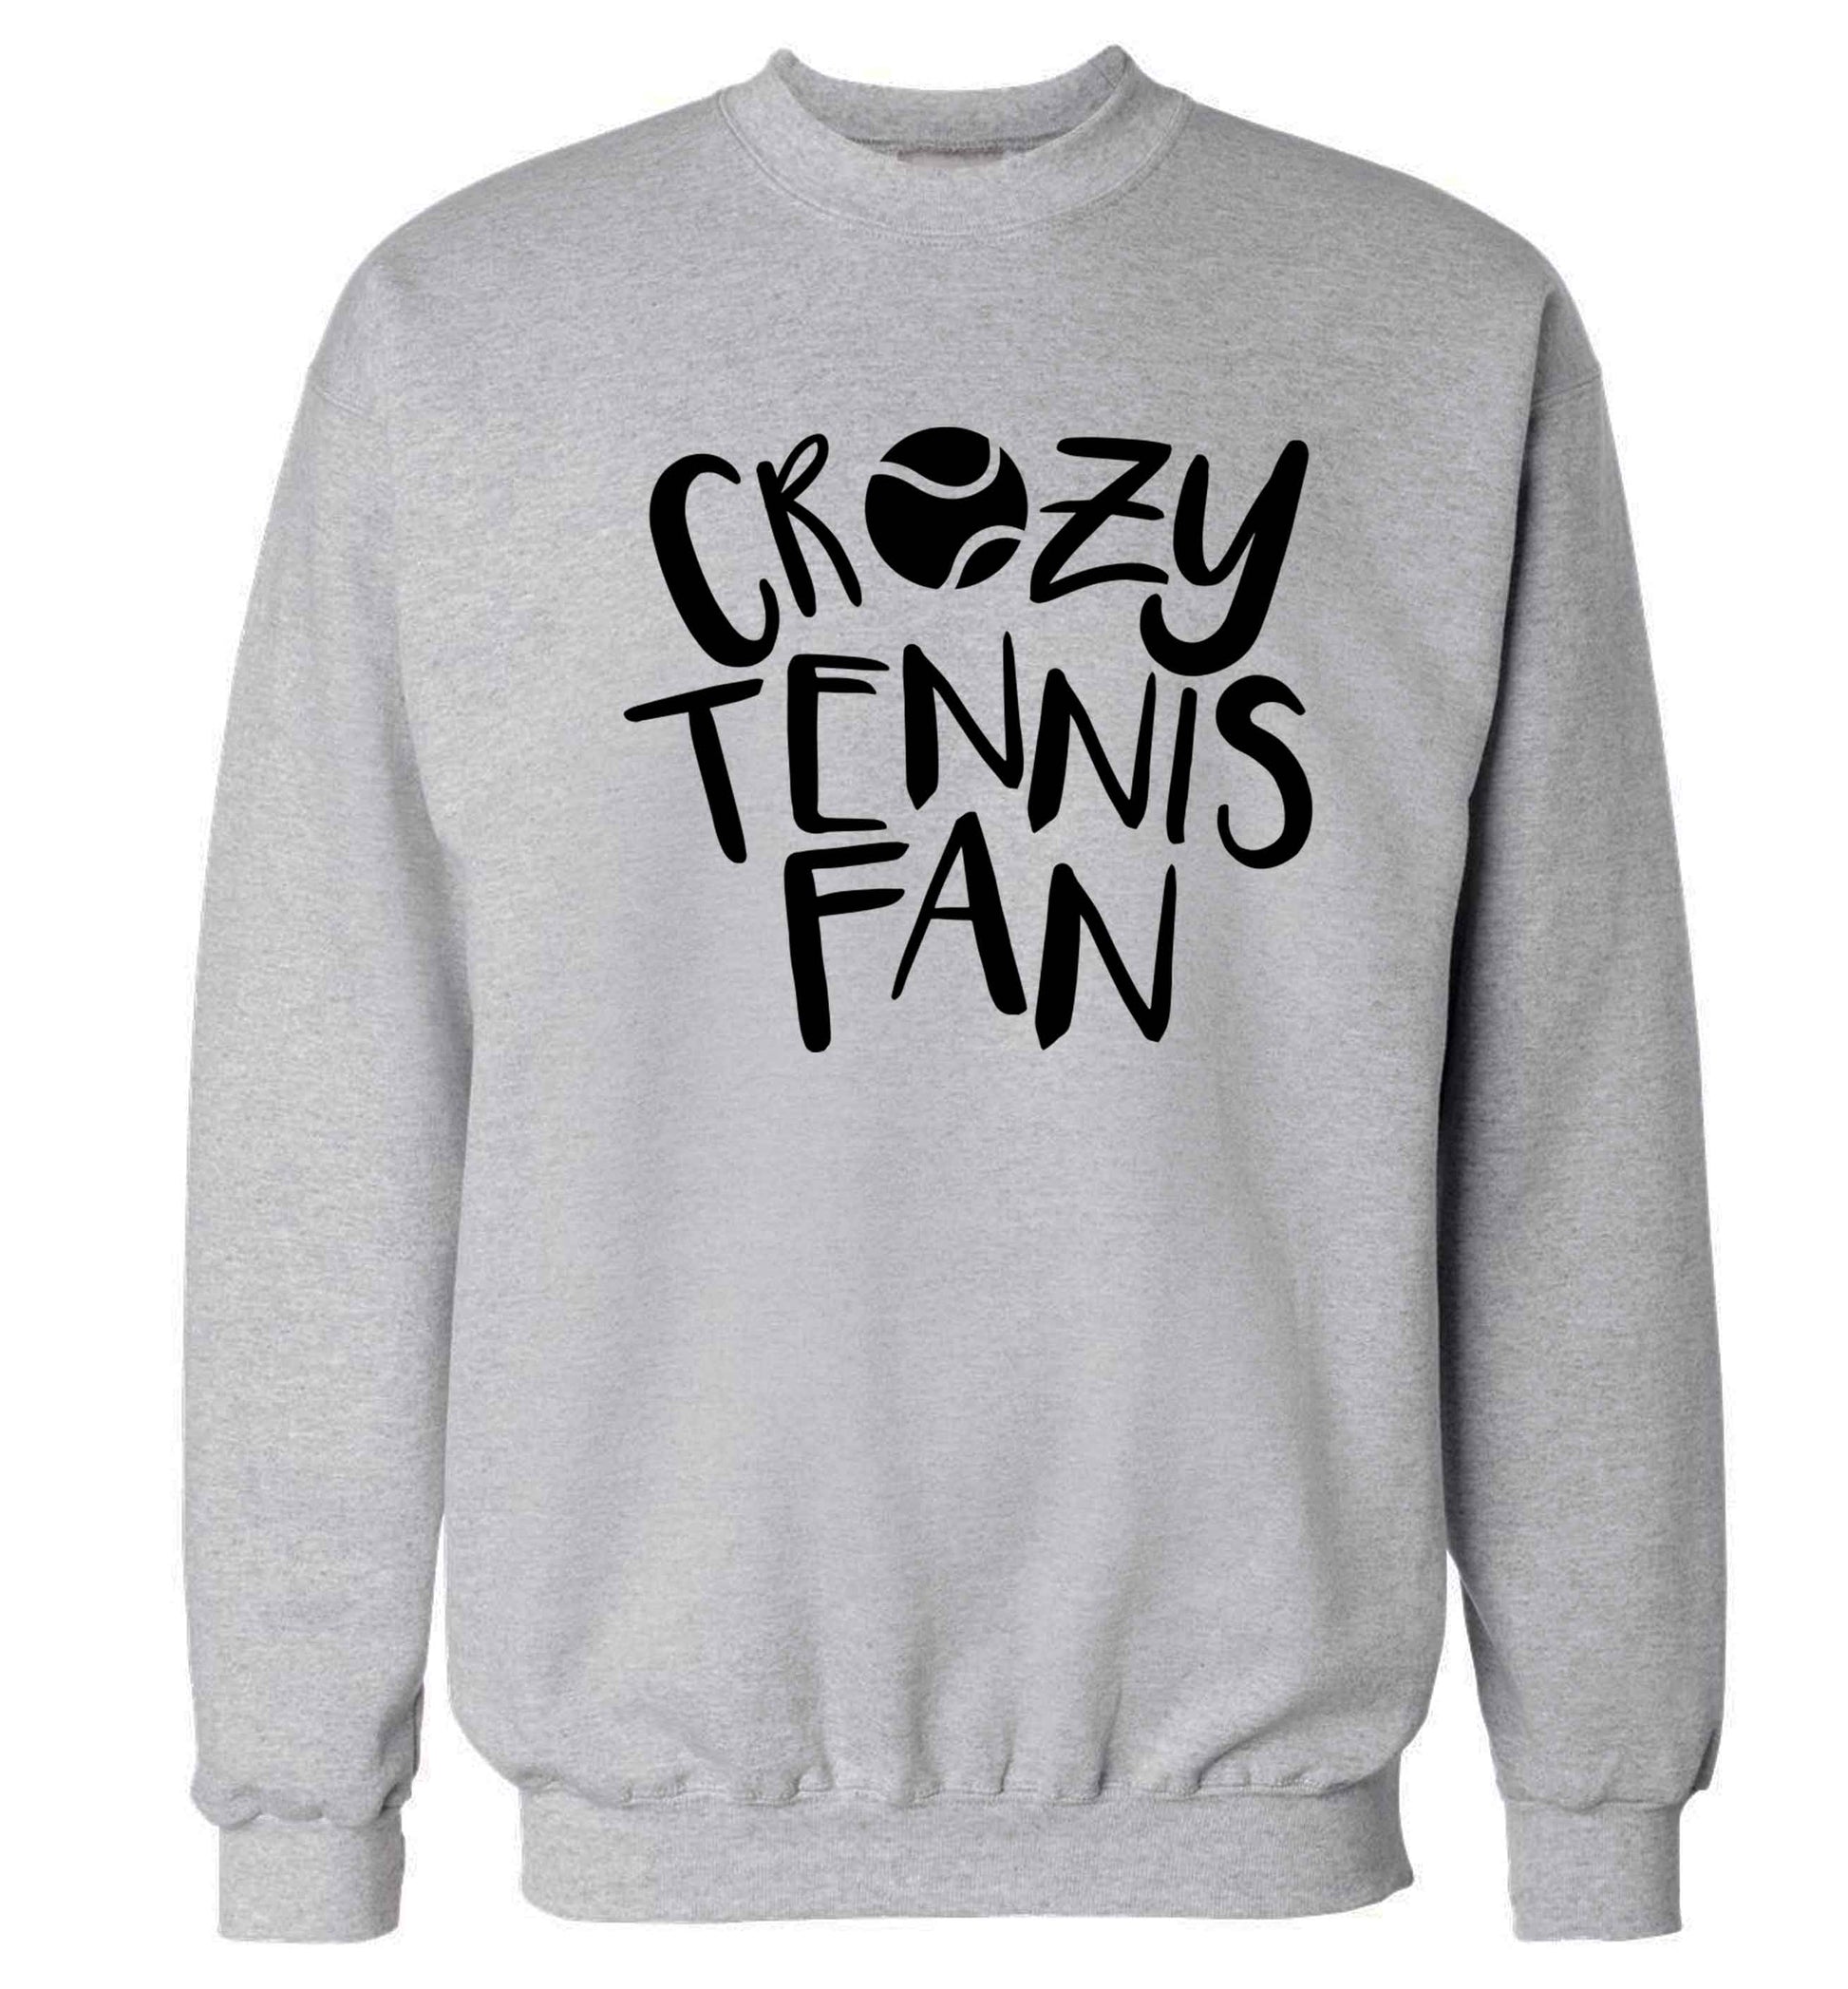 Crazy tennis fan Adult's unisex grey Sweater 2XL